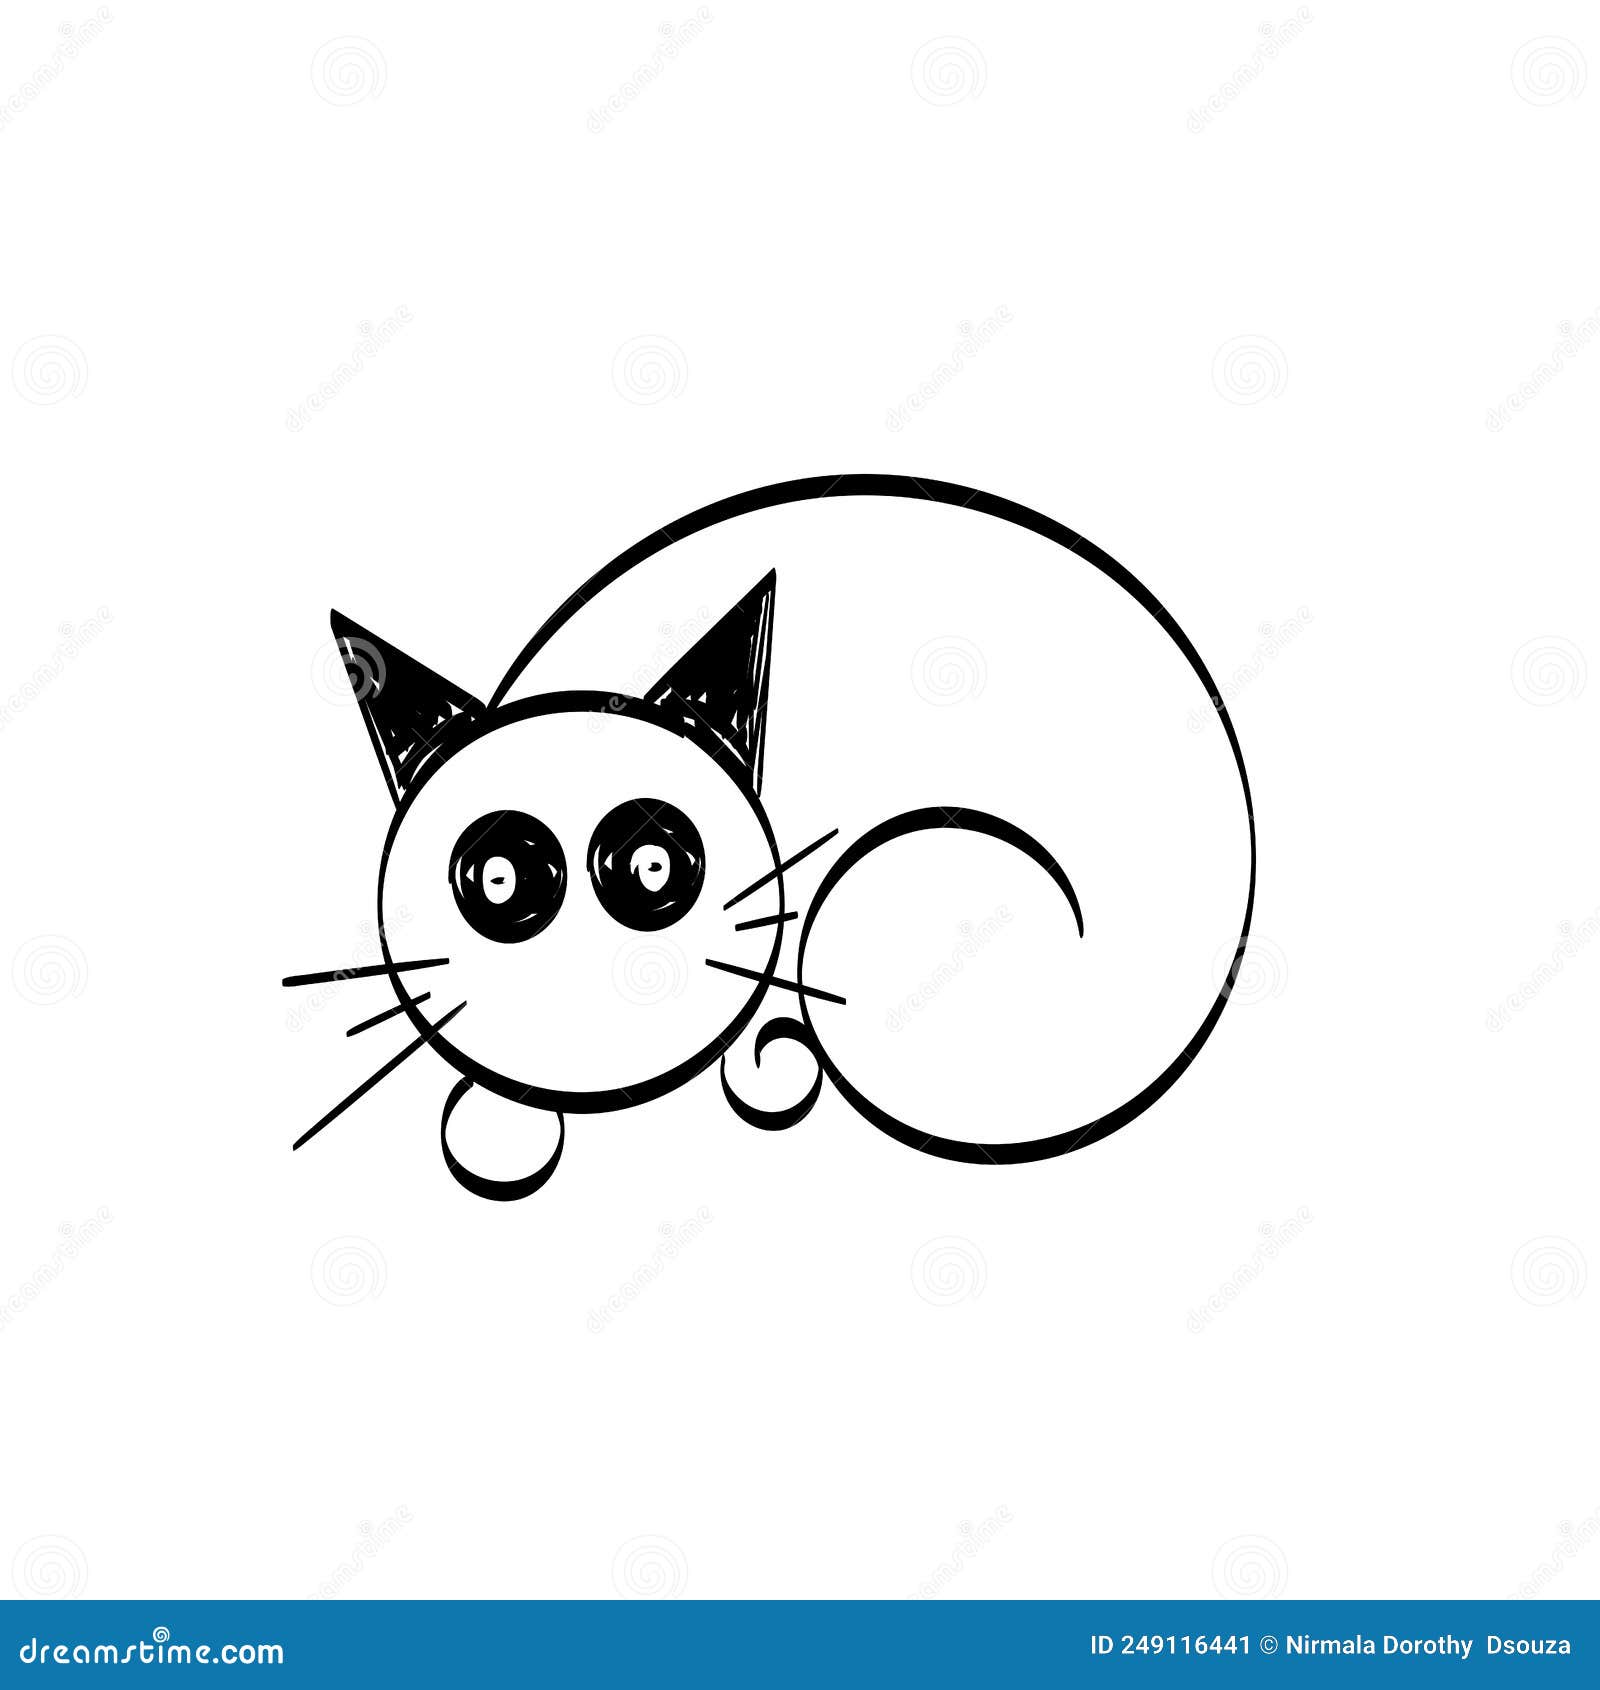 Simple Cat Line Art Design stock vector. Illustration of design